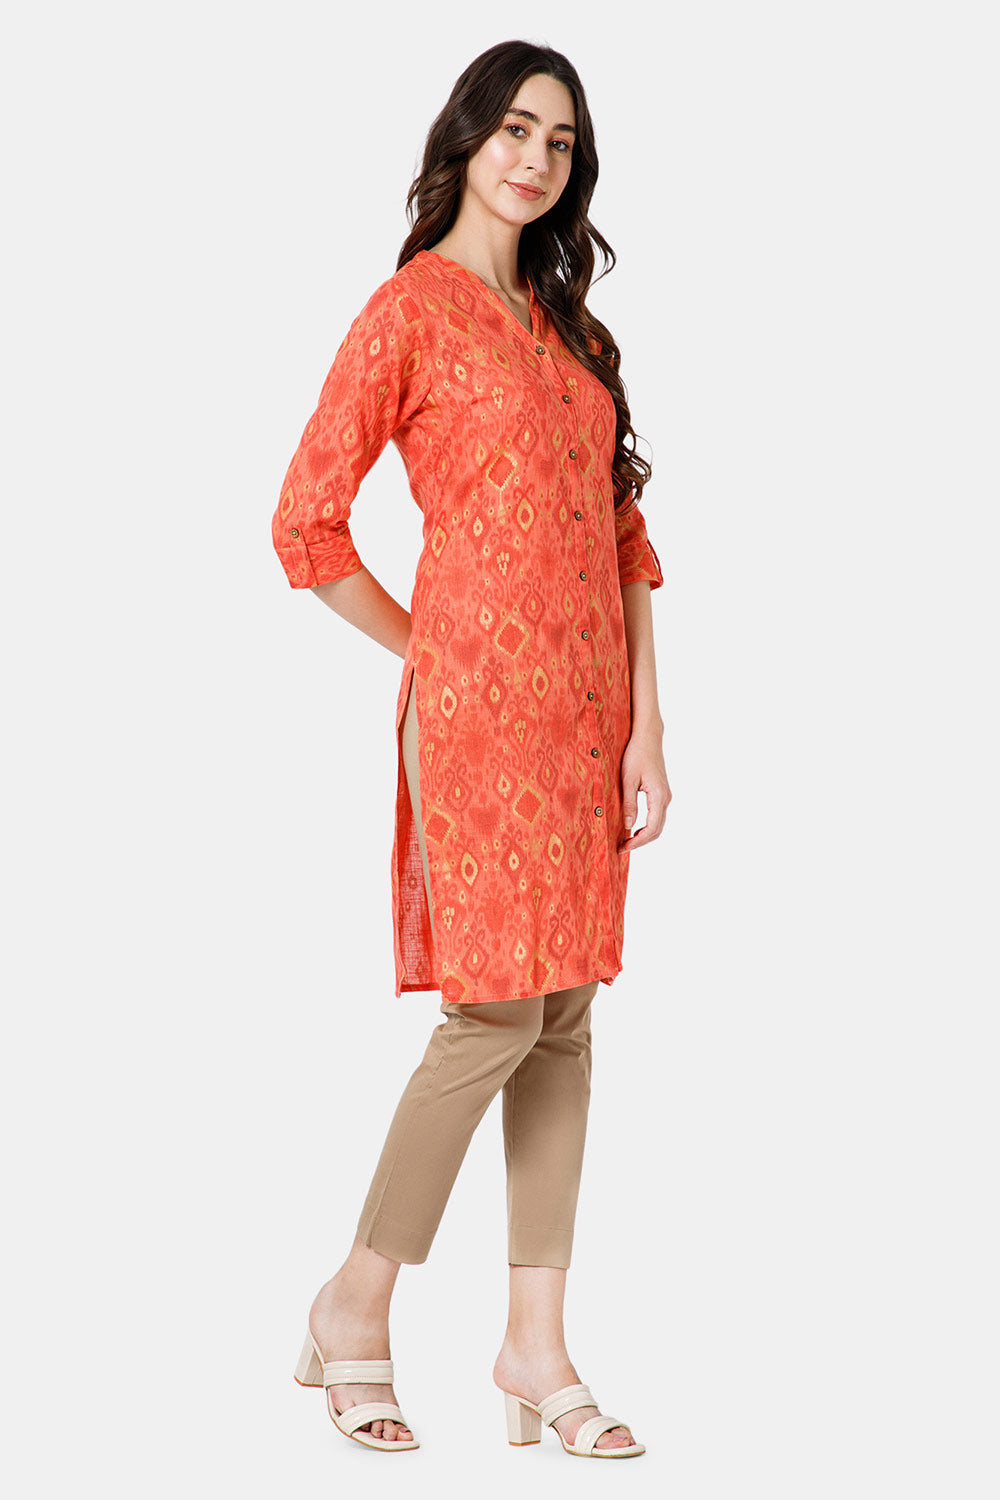 Mythri Women's Ethnic Wear Mandarin collar 3/4 sleeve with front Full placket styling - Red - KU37